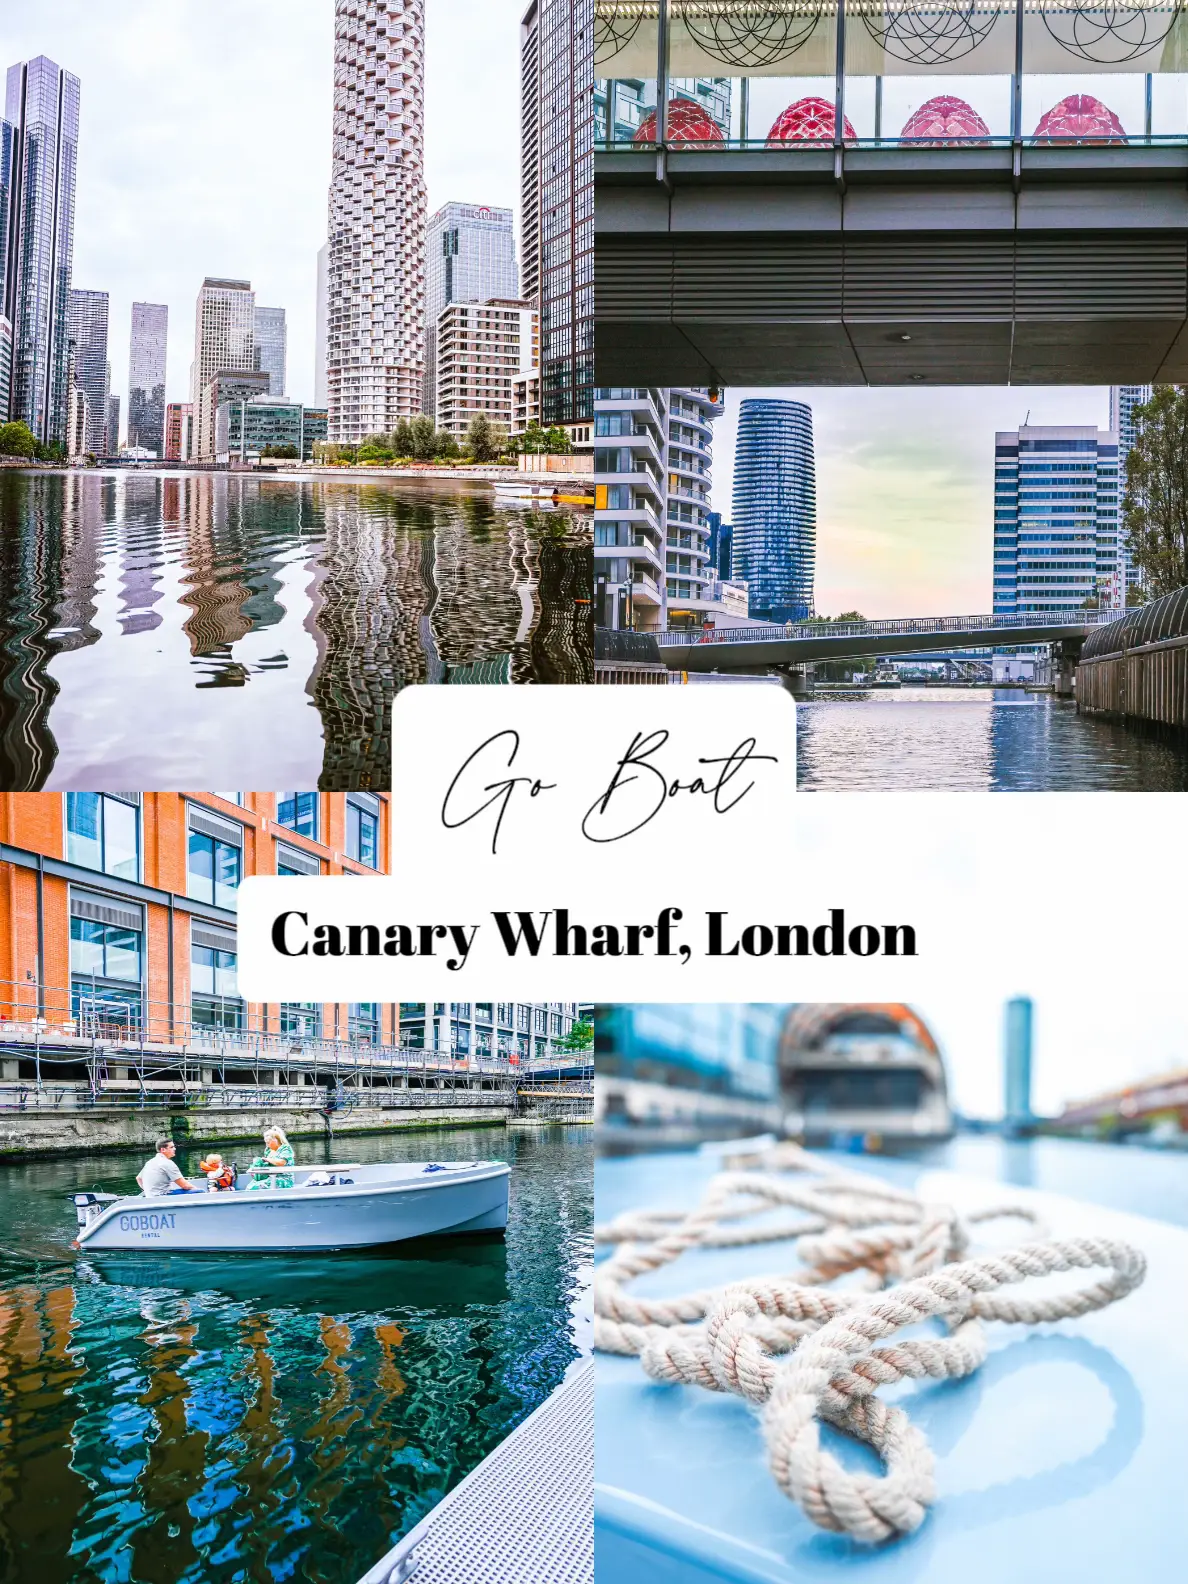 Canary Wharf Boat - Lemon8 Search